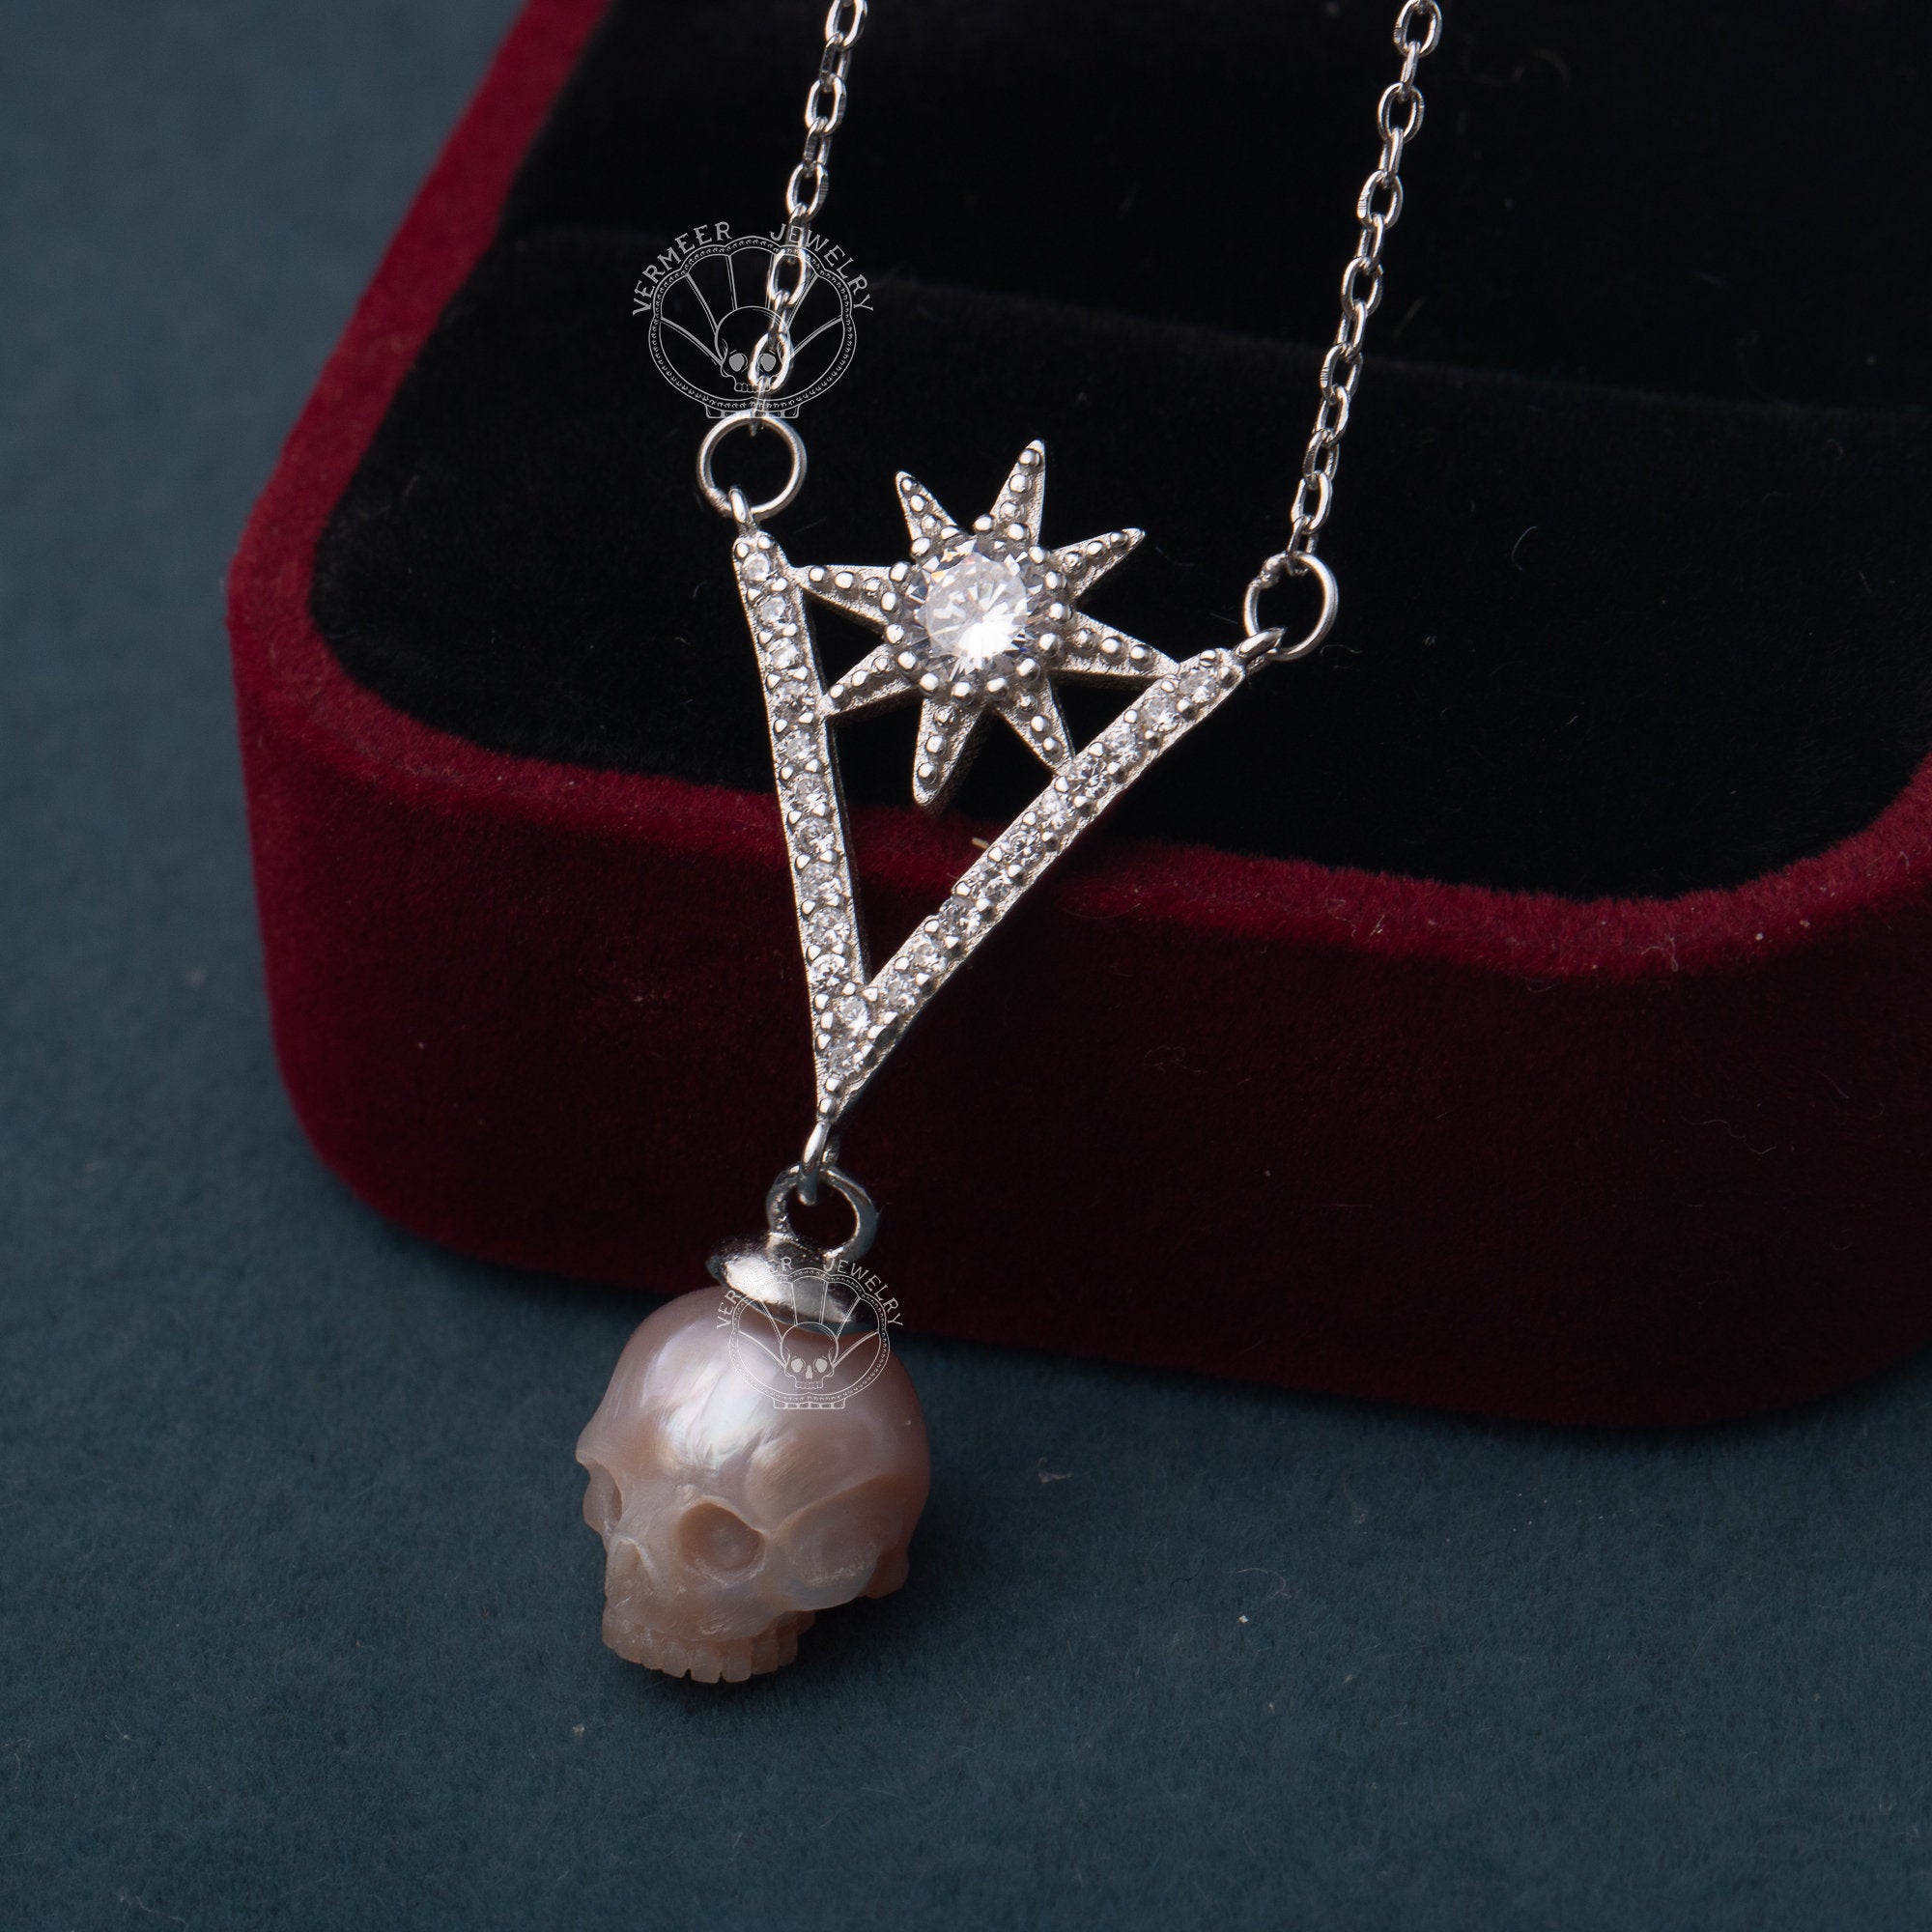 skull pearl handcarved necklace  sterling sliver V shape classic necklace for wedding gift for woman